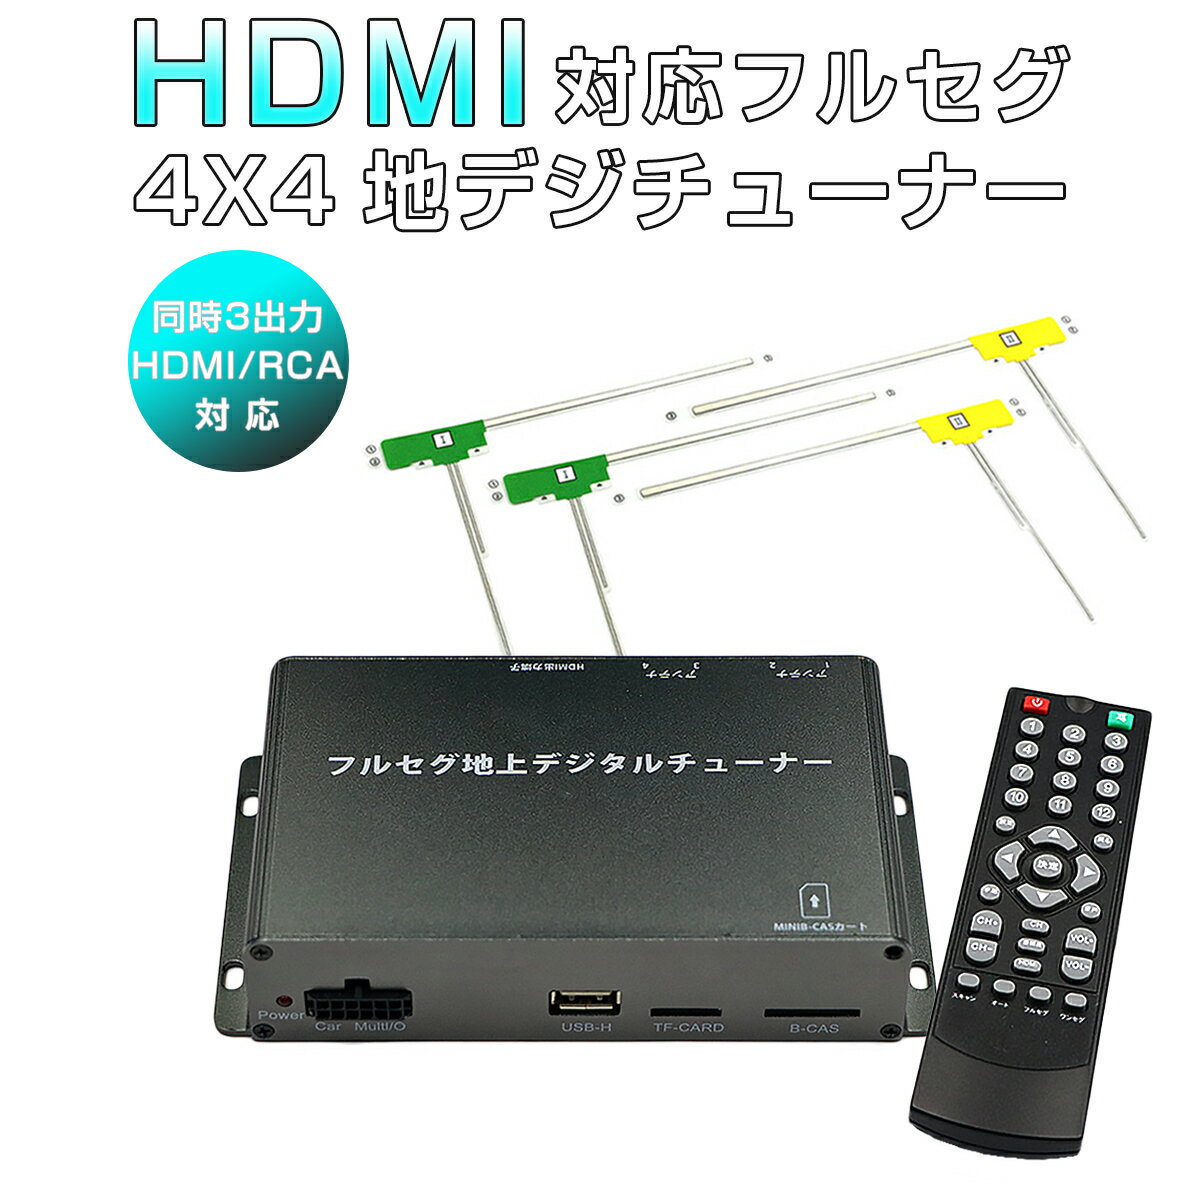 MAZDA用の非純正品 ミレーニア 地デジチューナー カーナビ ワンセグ フルセグ HDMI 4x4 高性能 4チューナー 4アンテナ 自動切換 150km/hまで受信 高画質 古い車載TVやカーナビにも使える 12V/24V フィルムアンテナ miniB-CASカード付き 6ヶ月保証